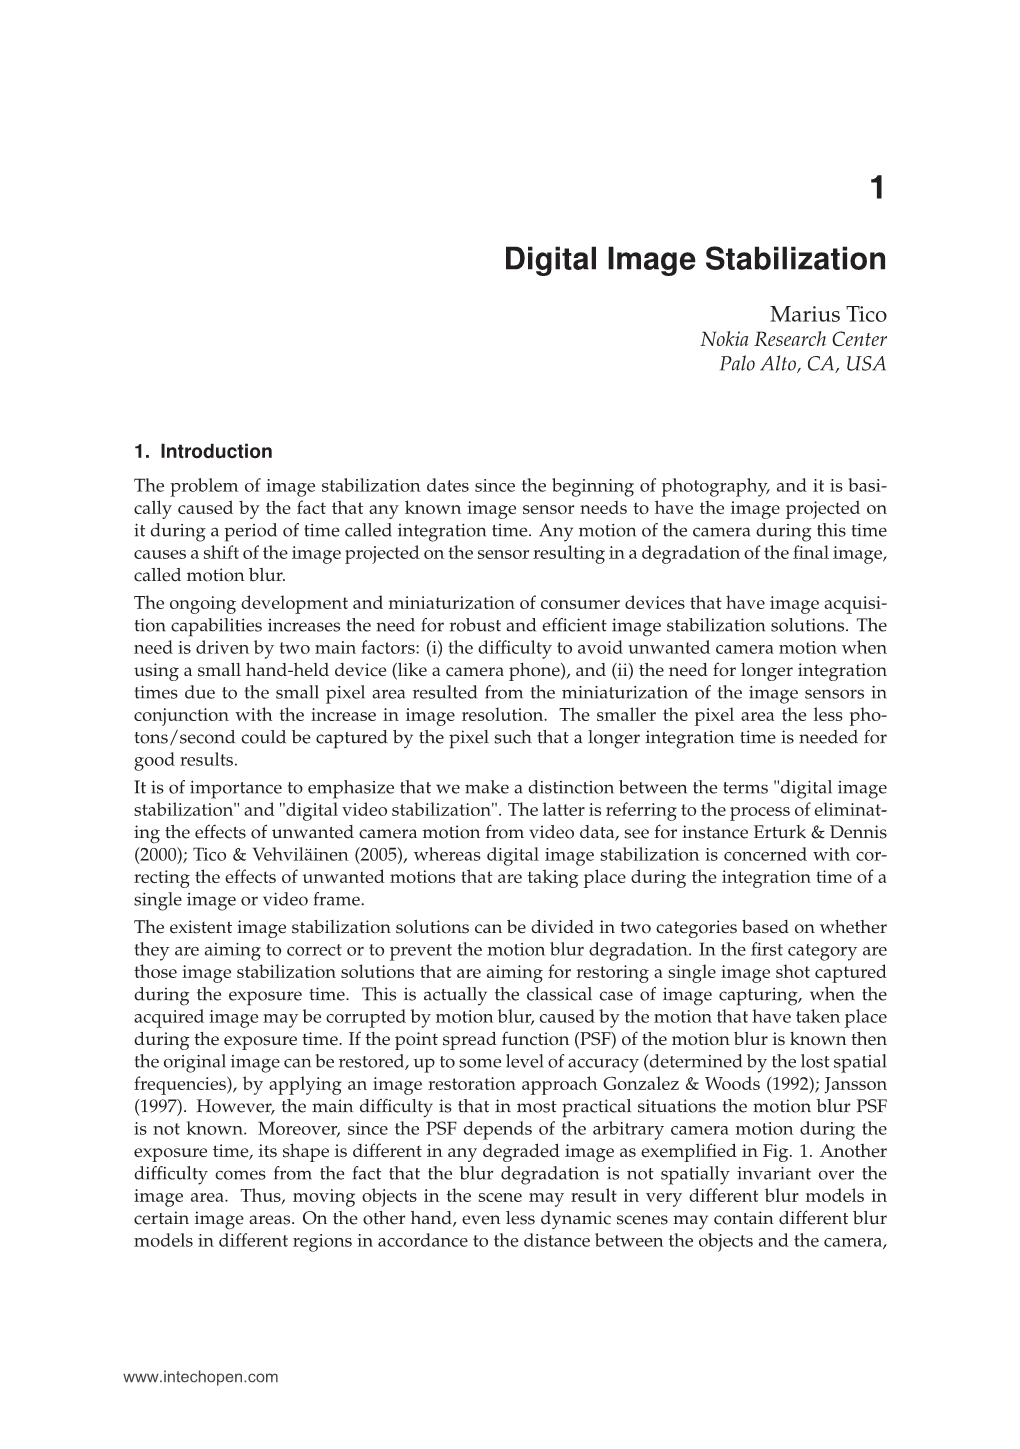 Digital Image Stabilization